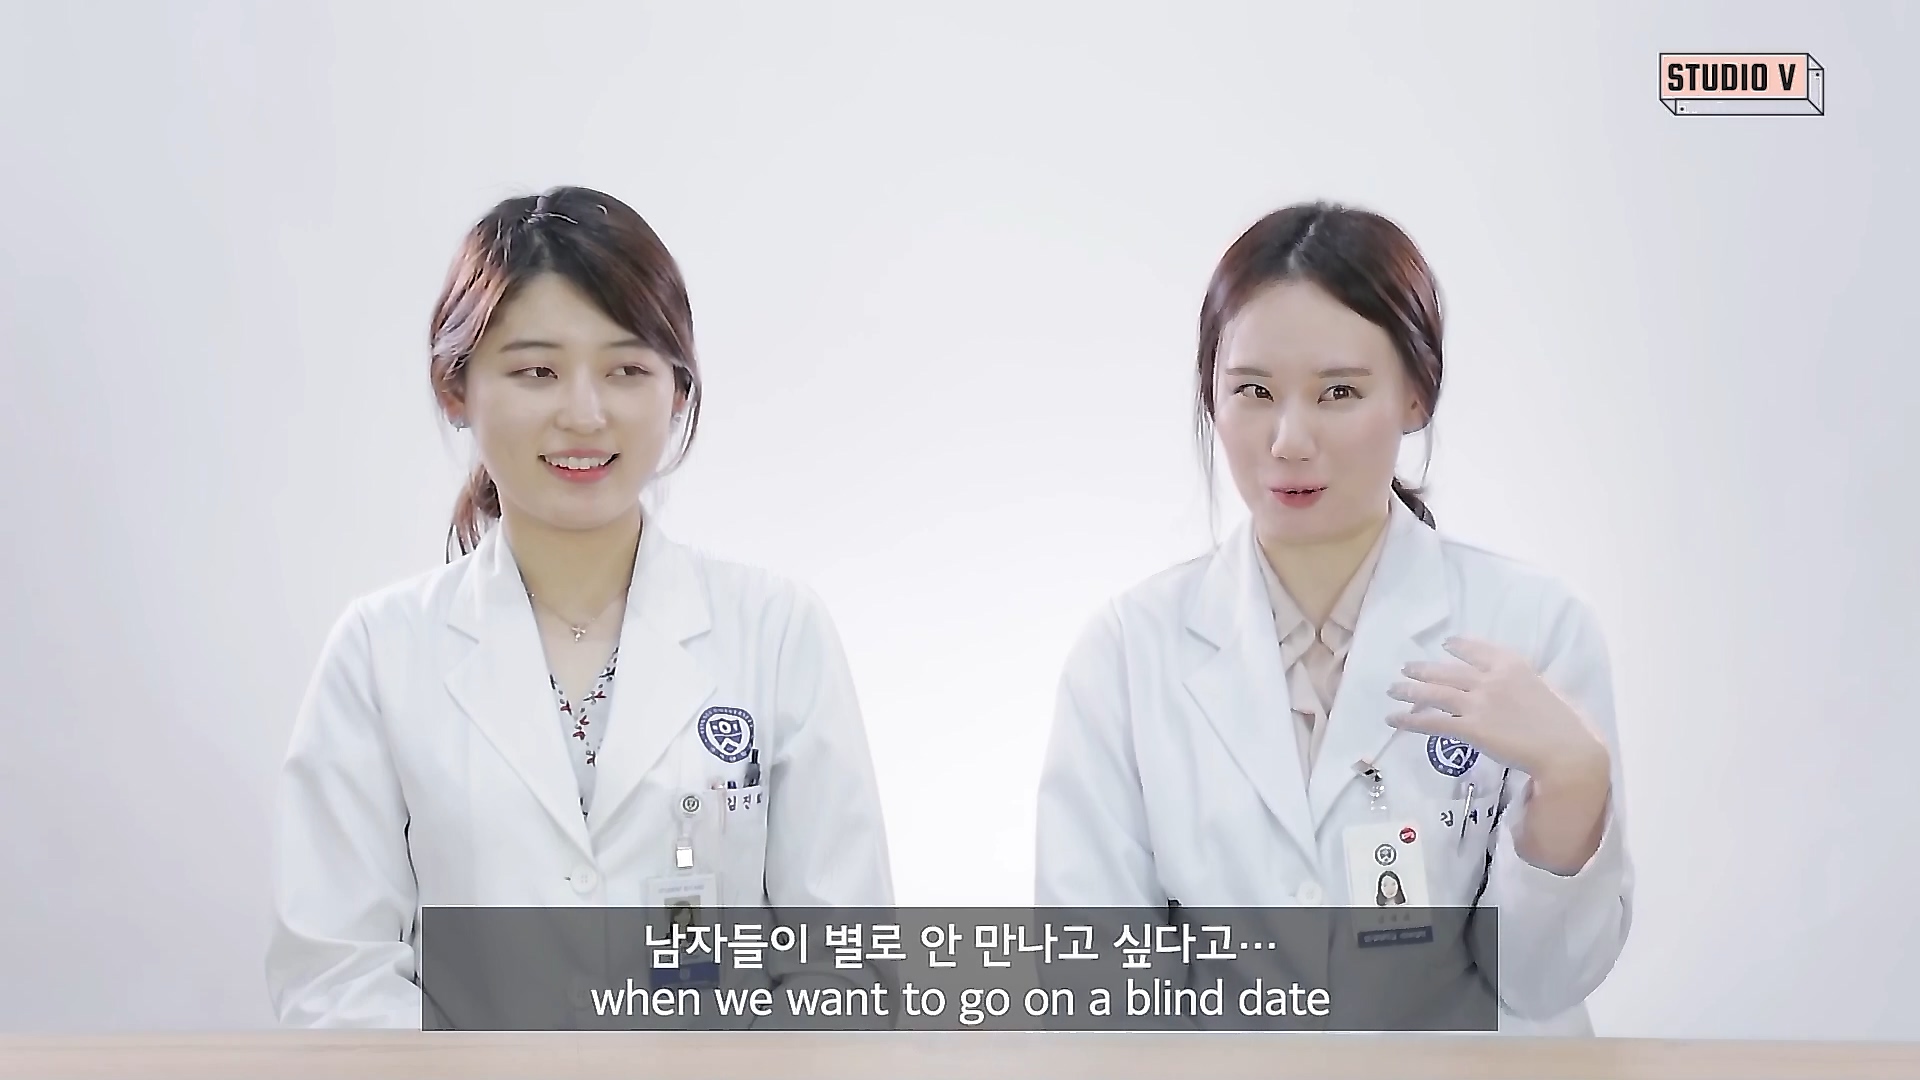 SWAP medical school students' blind date.